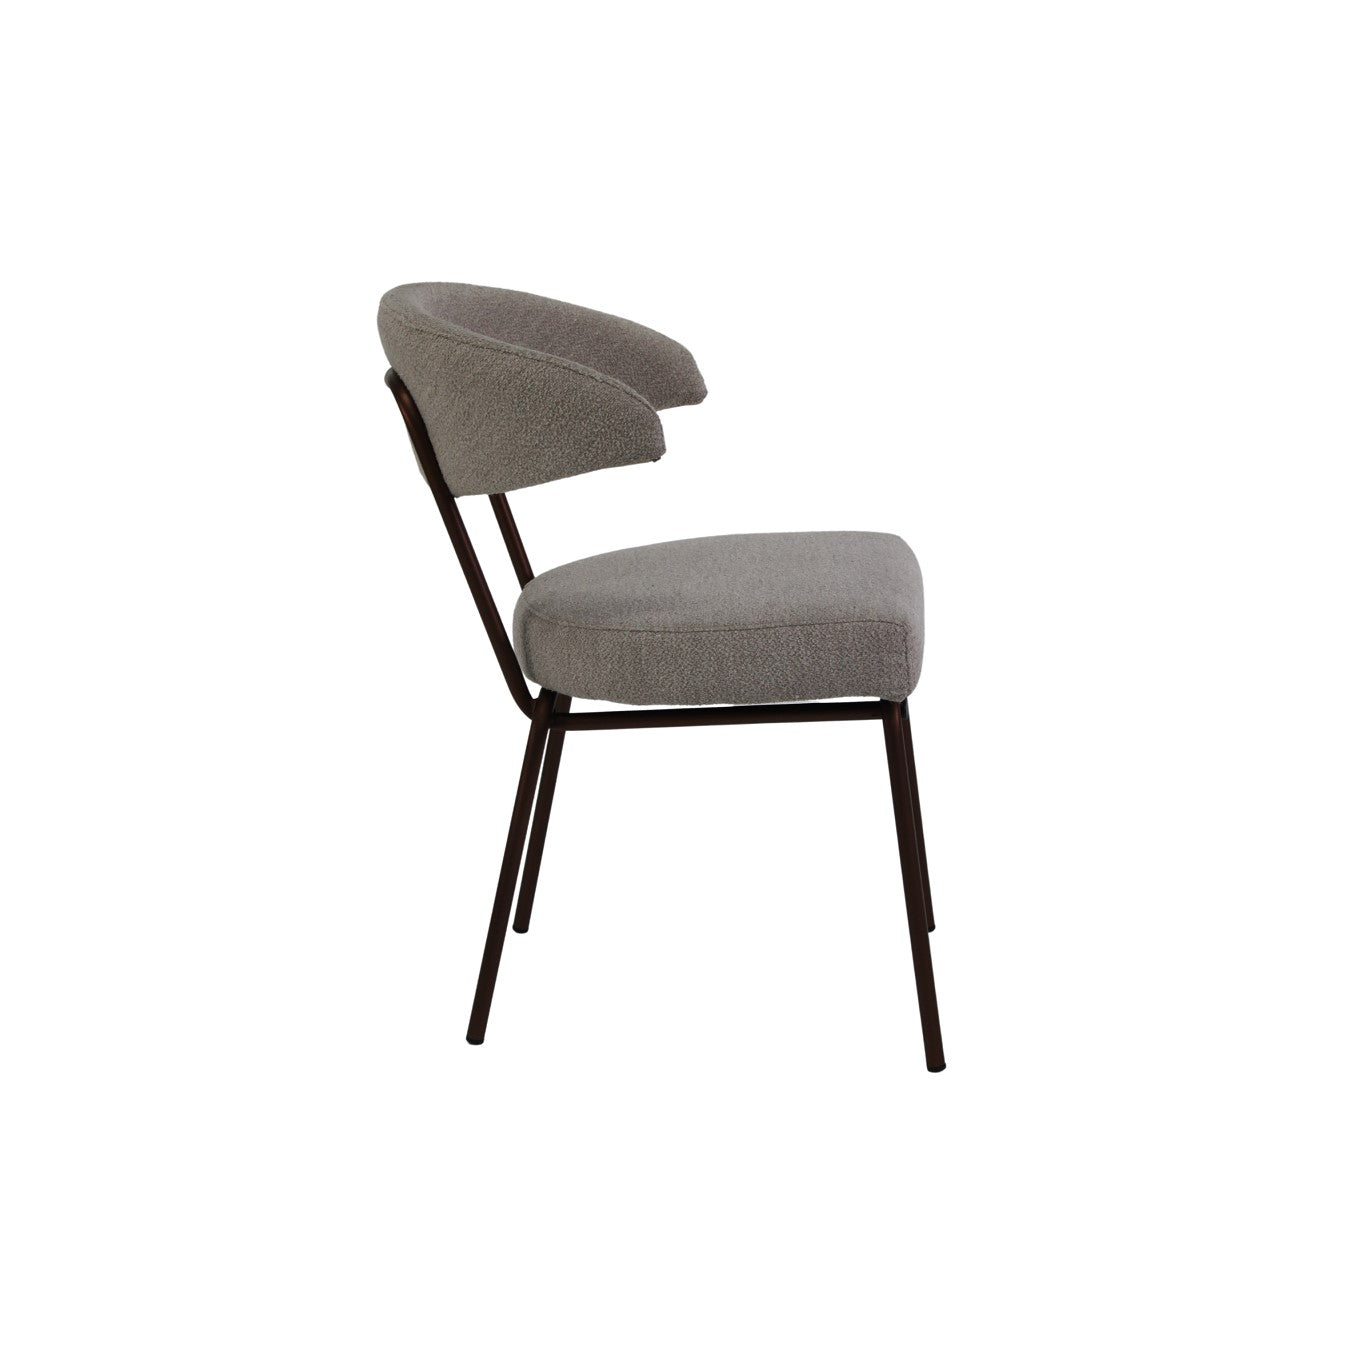 Stuhl aus Bouclé-Material ✔ Modell PINA